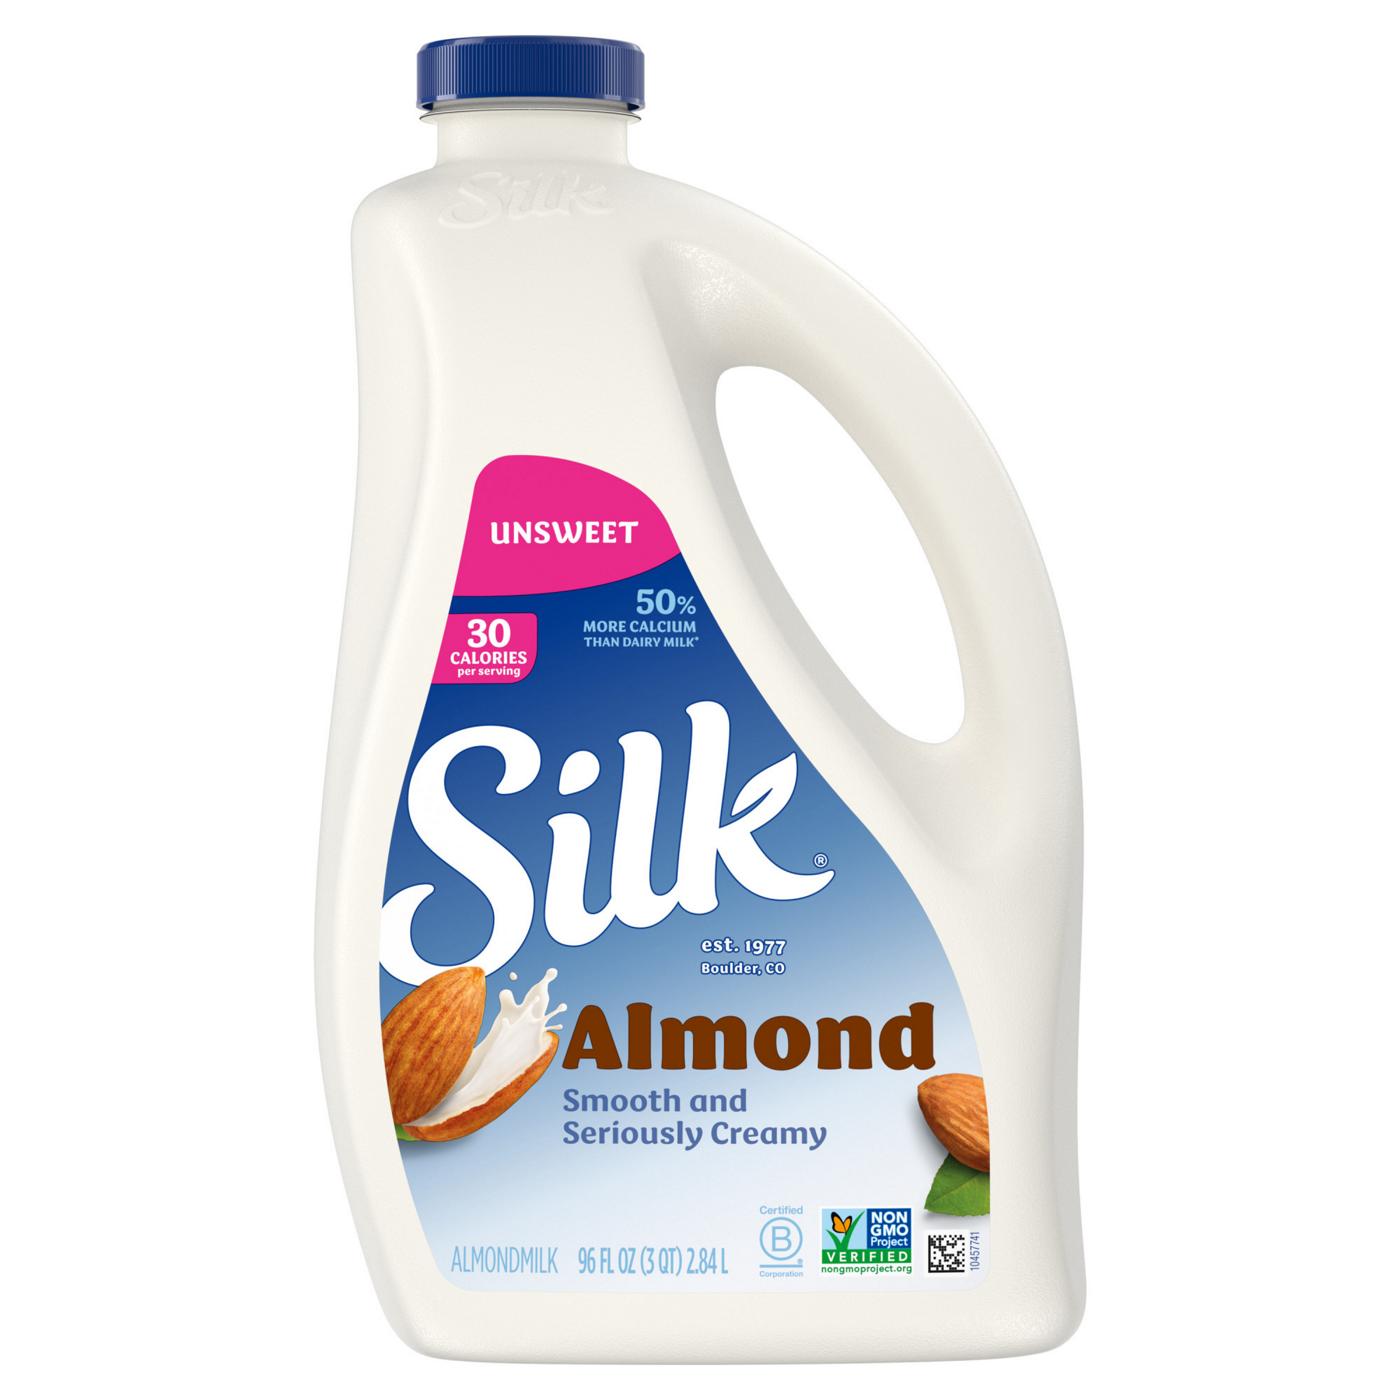 Silk Unsweetened Almond Milk; image 1 of 2